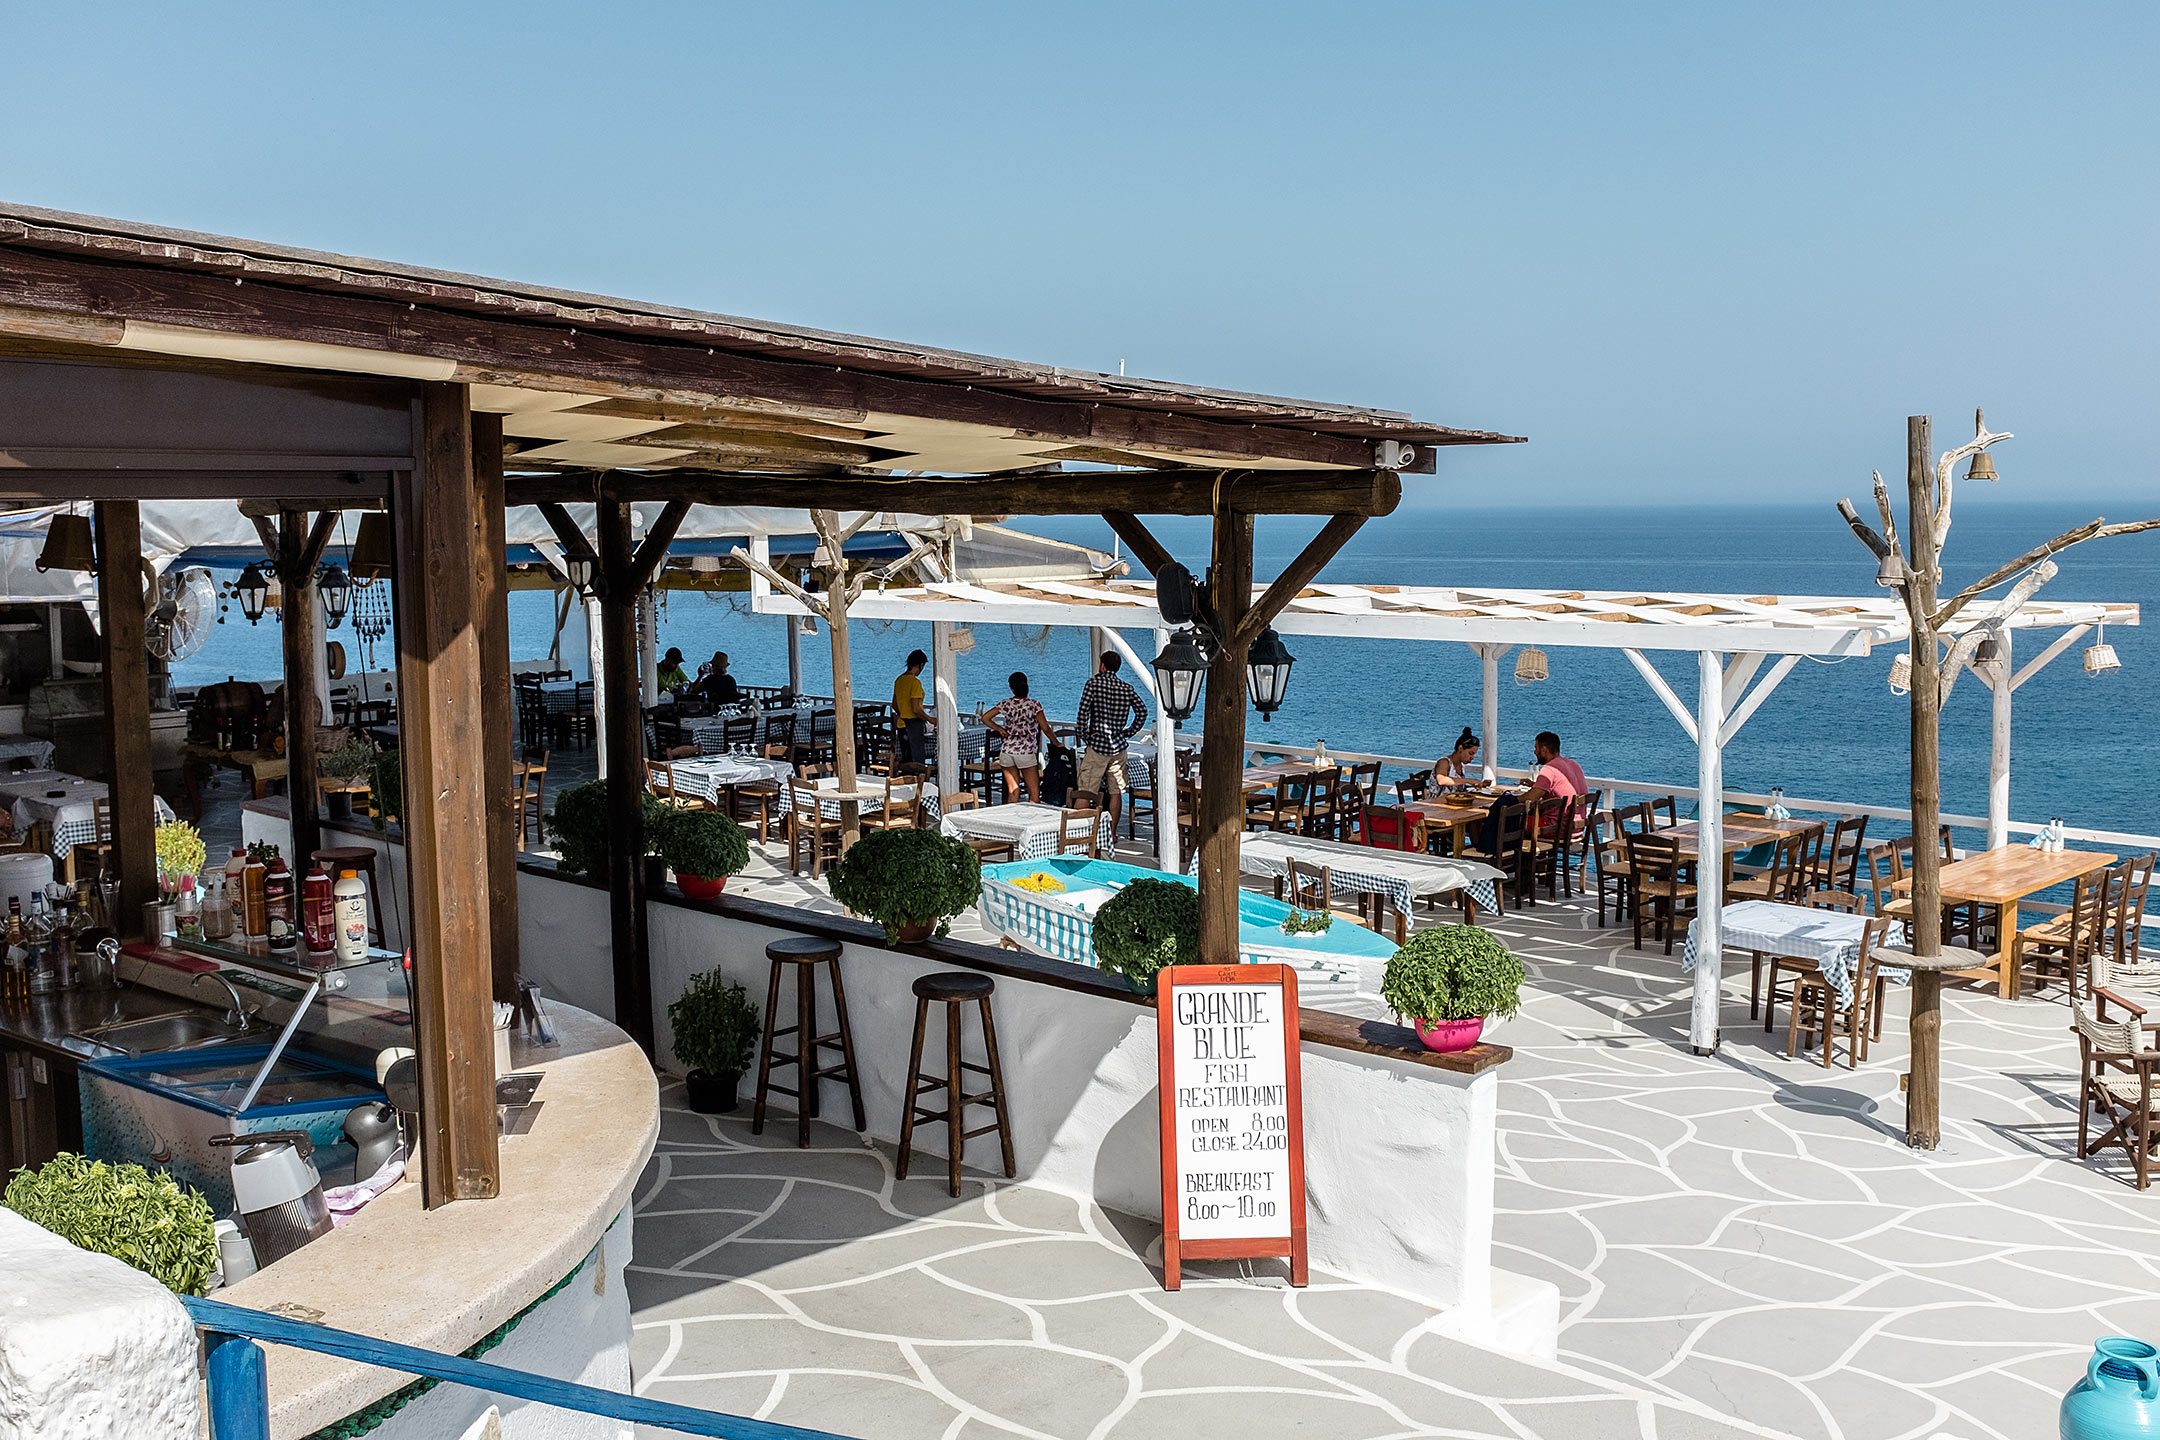 Grande Blue Restaurant Rhodos Stegna Geheimtipp Griechenland Travel Blog Sunnyinga